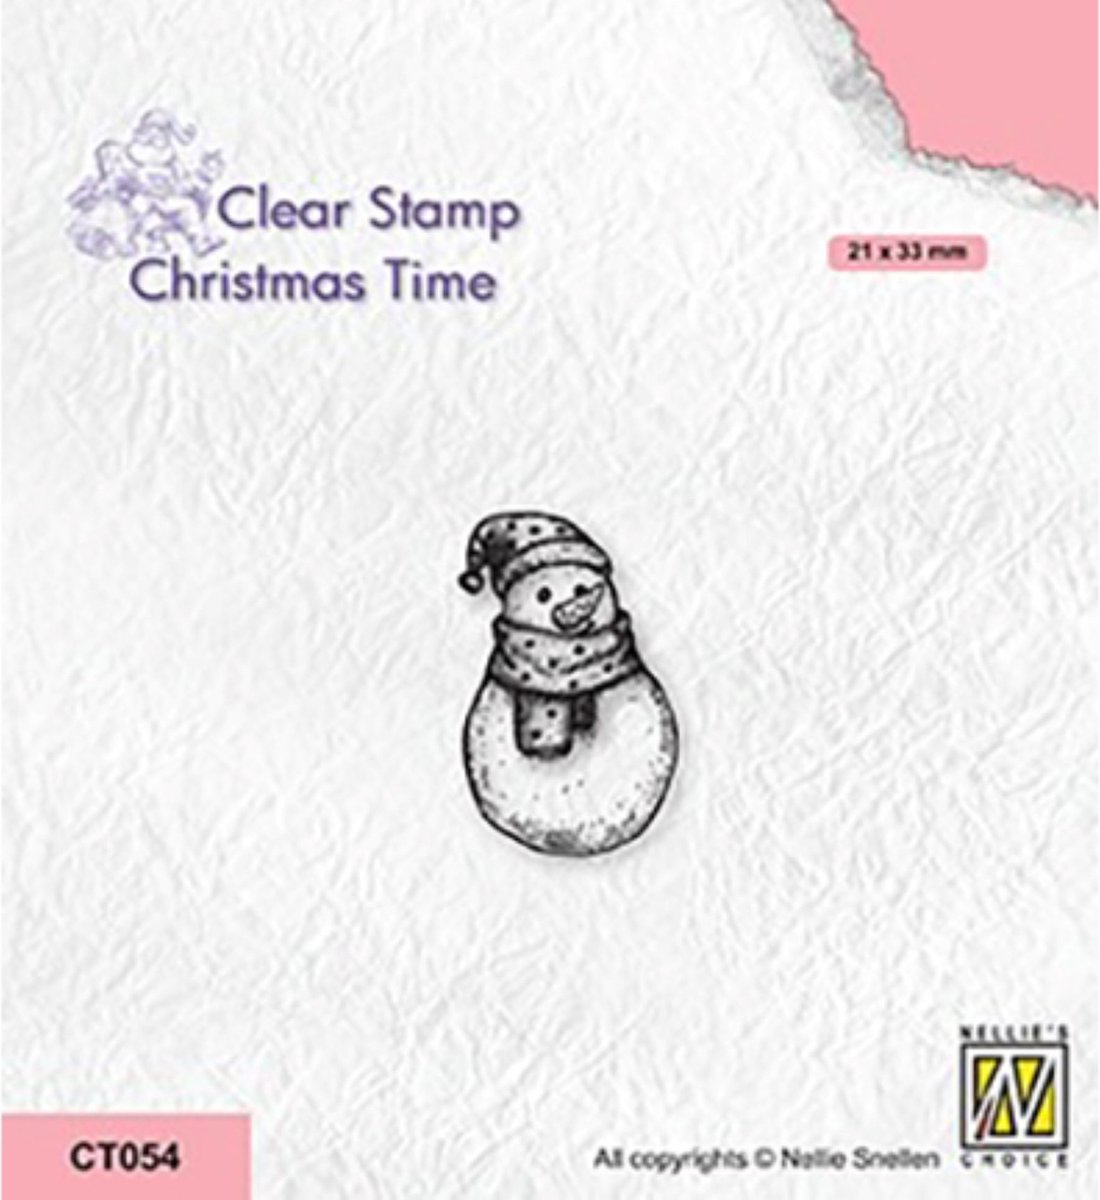 CT054 - Nellie Snellen Christmas Time Clear Stamp Snowman 2 - stempel sneeuwman sneeuwpop met muts - winter - kerstmis - kerst